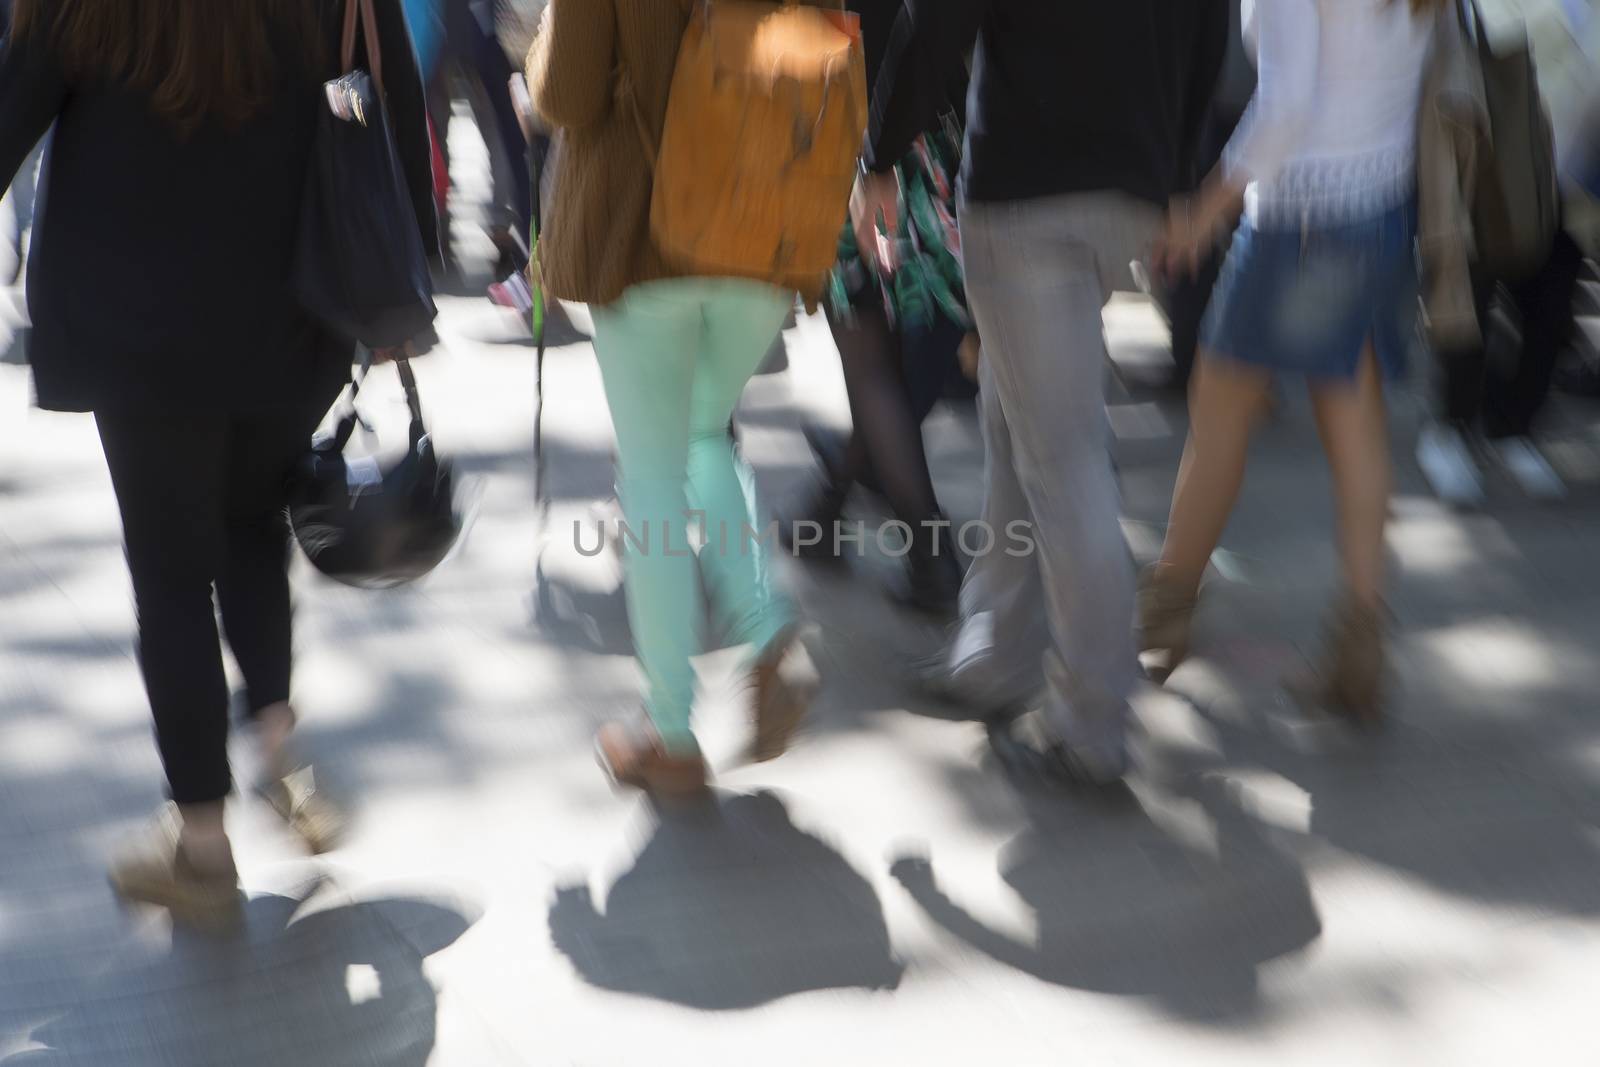 Mlotion blured pedestrians on city street by JPC-PROD